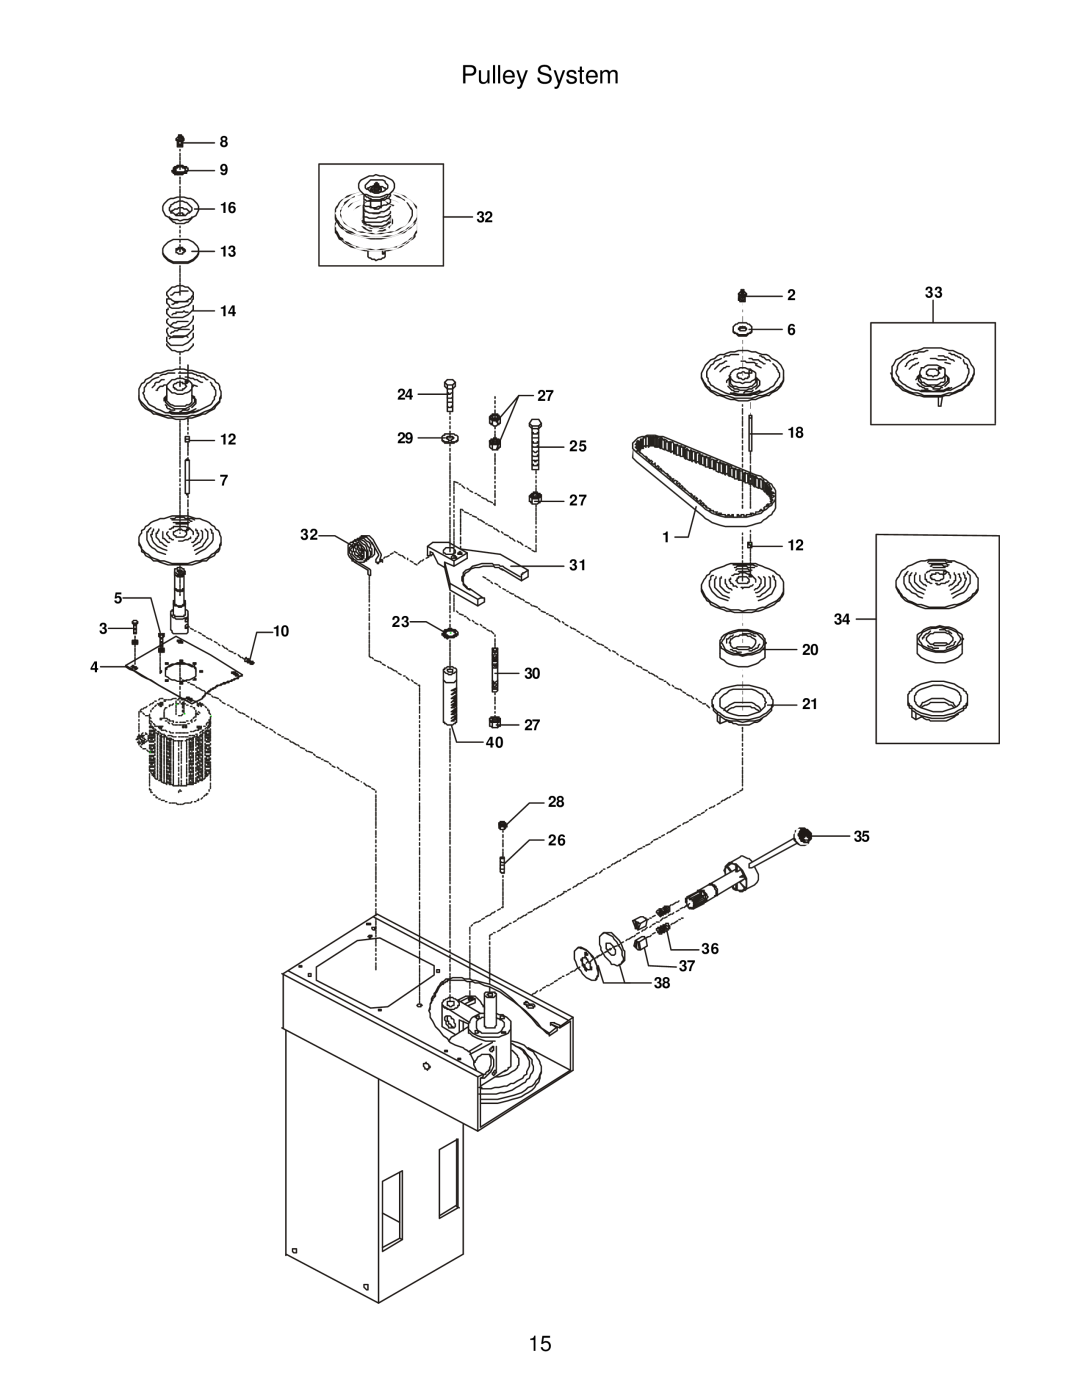 Varimixer W20 A, W20 J, W20 F operation manual Pulley System, 1229 